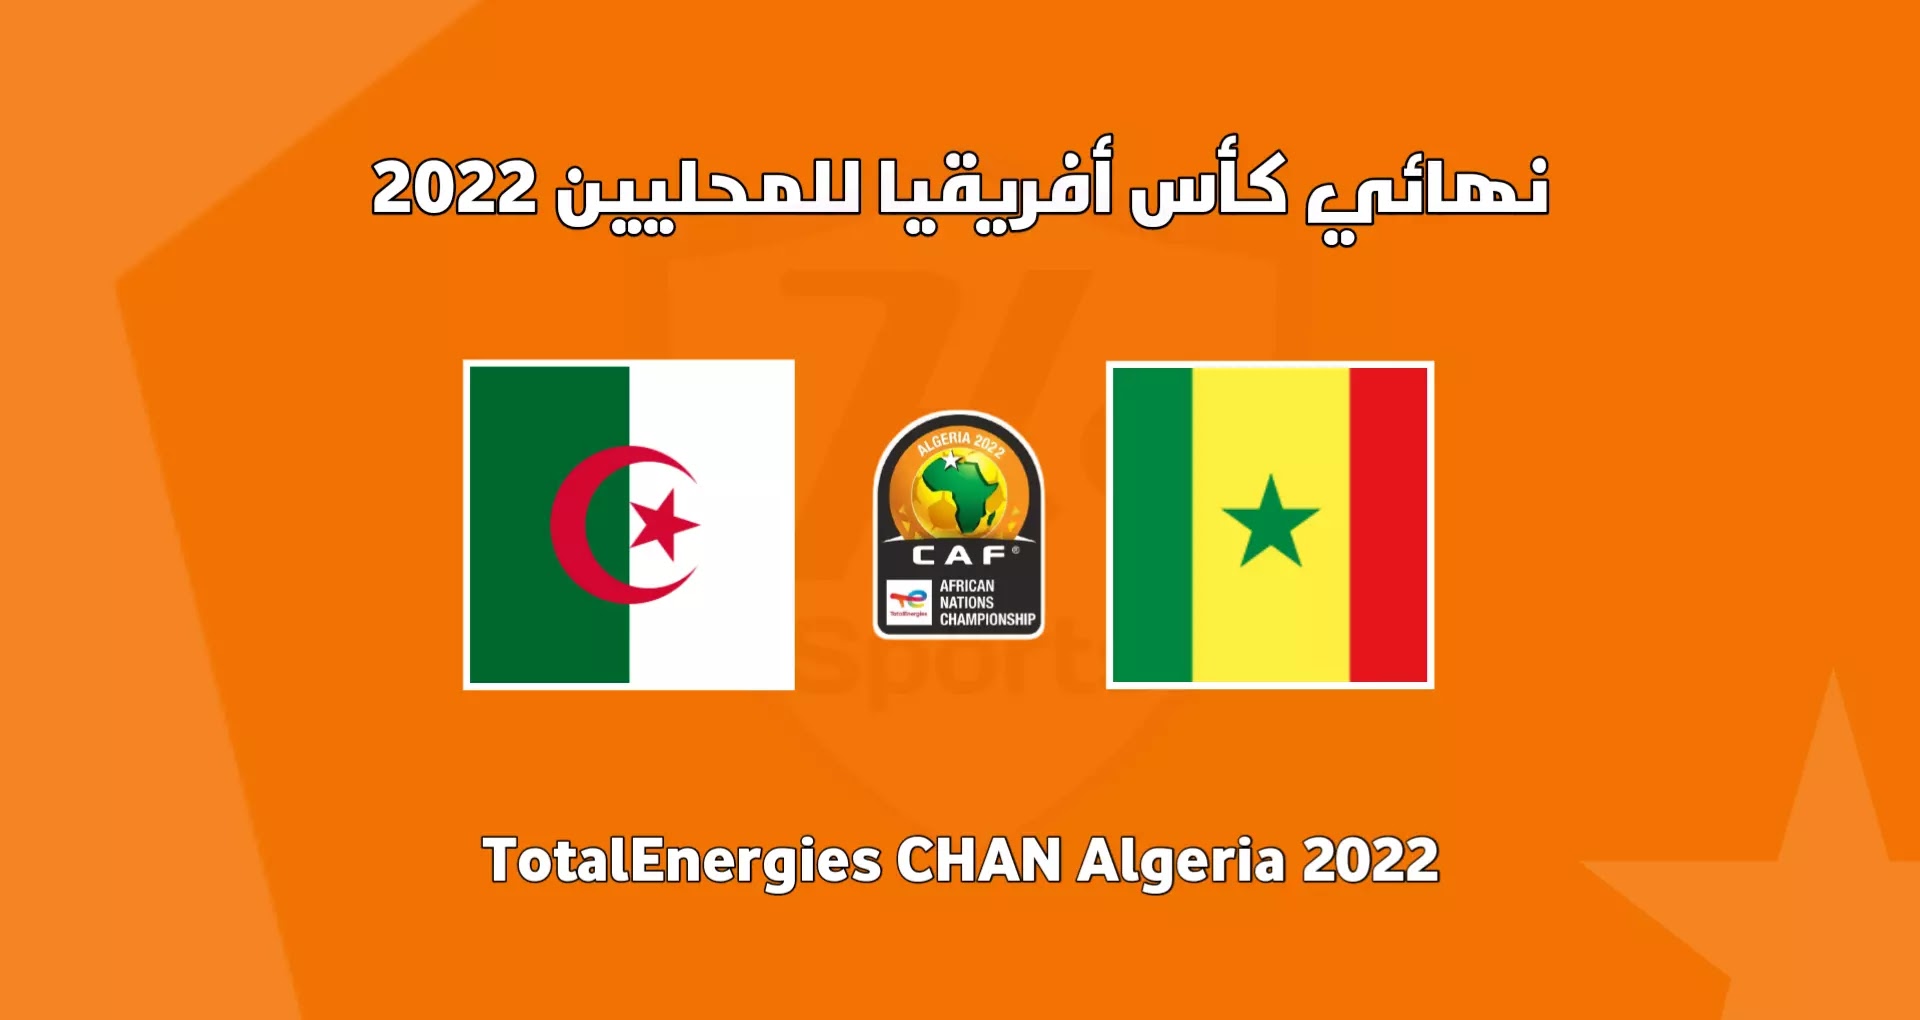 The TotalEnergies CHAN, Algeria 2022